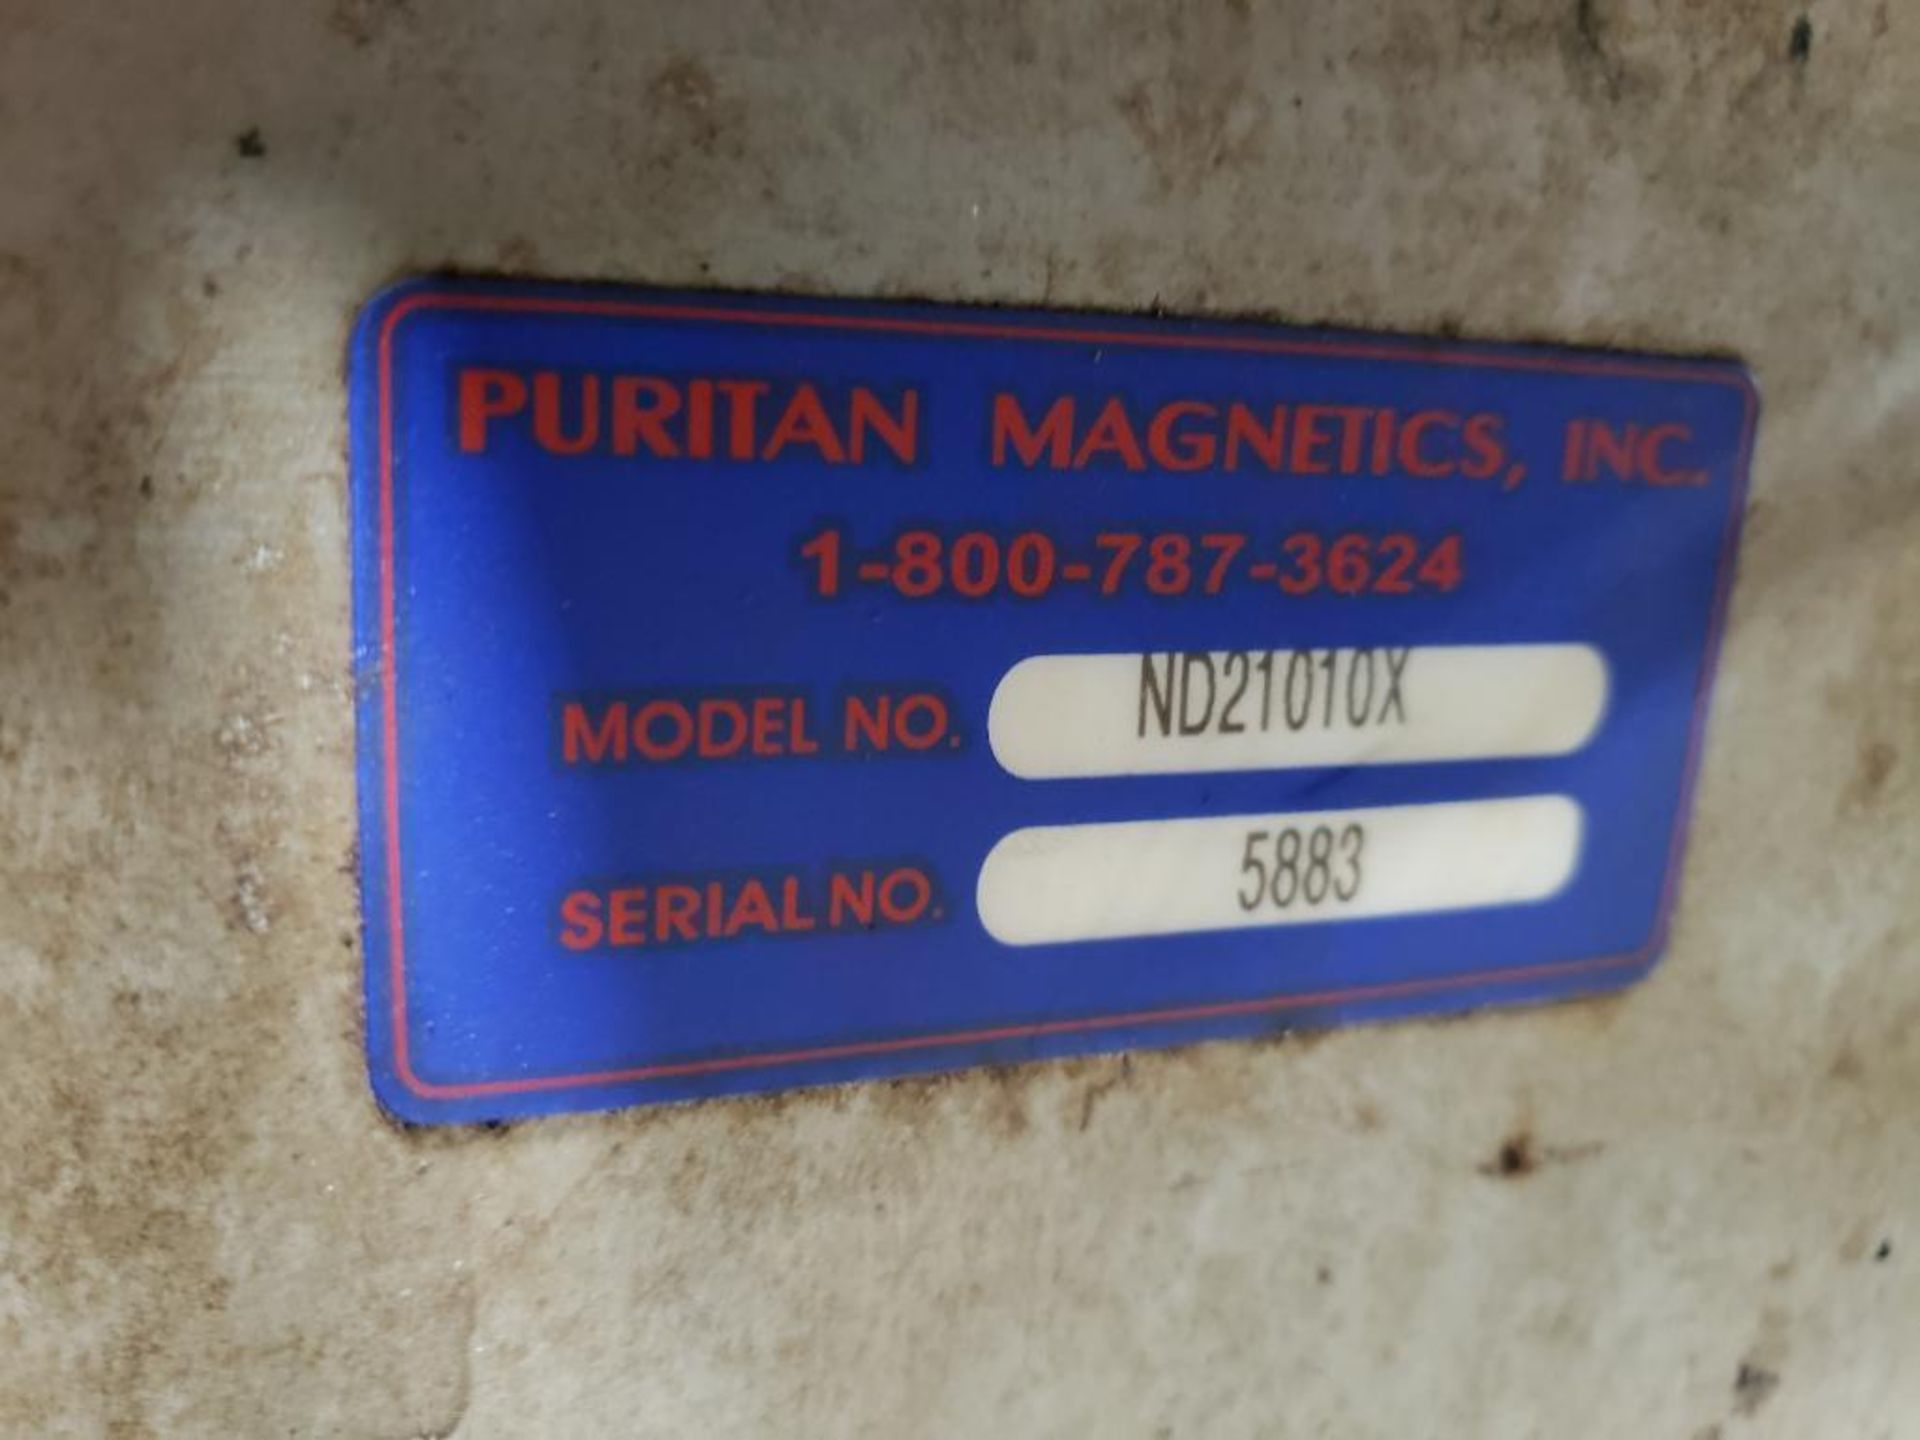 Qty 2 - Puritan Magnetics magnetic separator. Model ND21010X. - Image 4 of 8